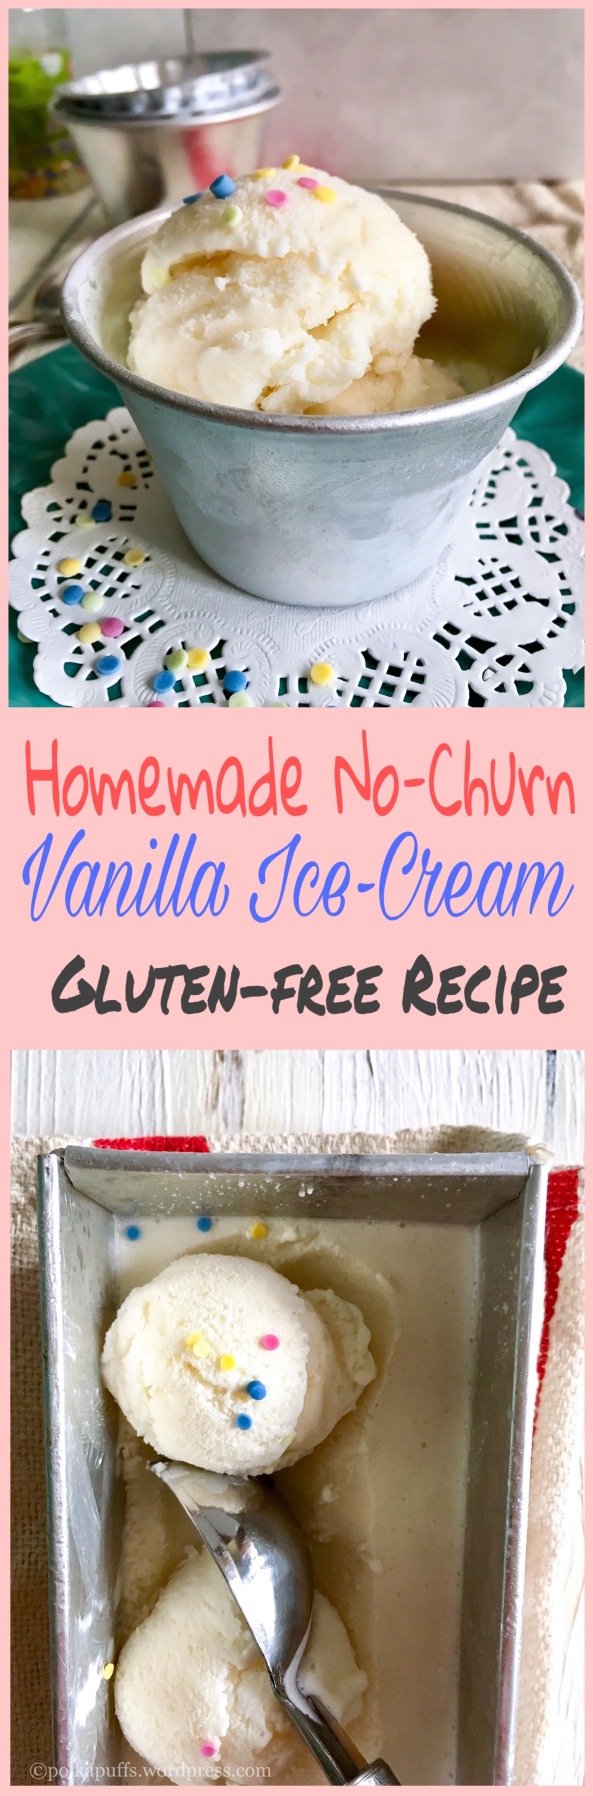 Homemade No-Churn Vanilla Ice-Cream Glutenfree recipe